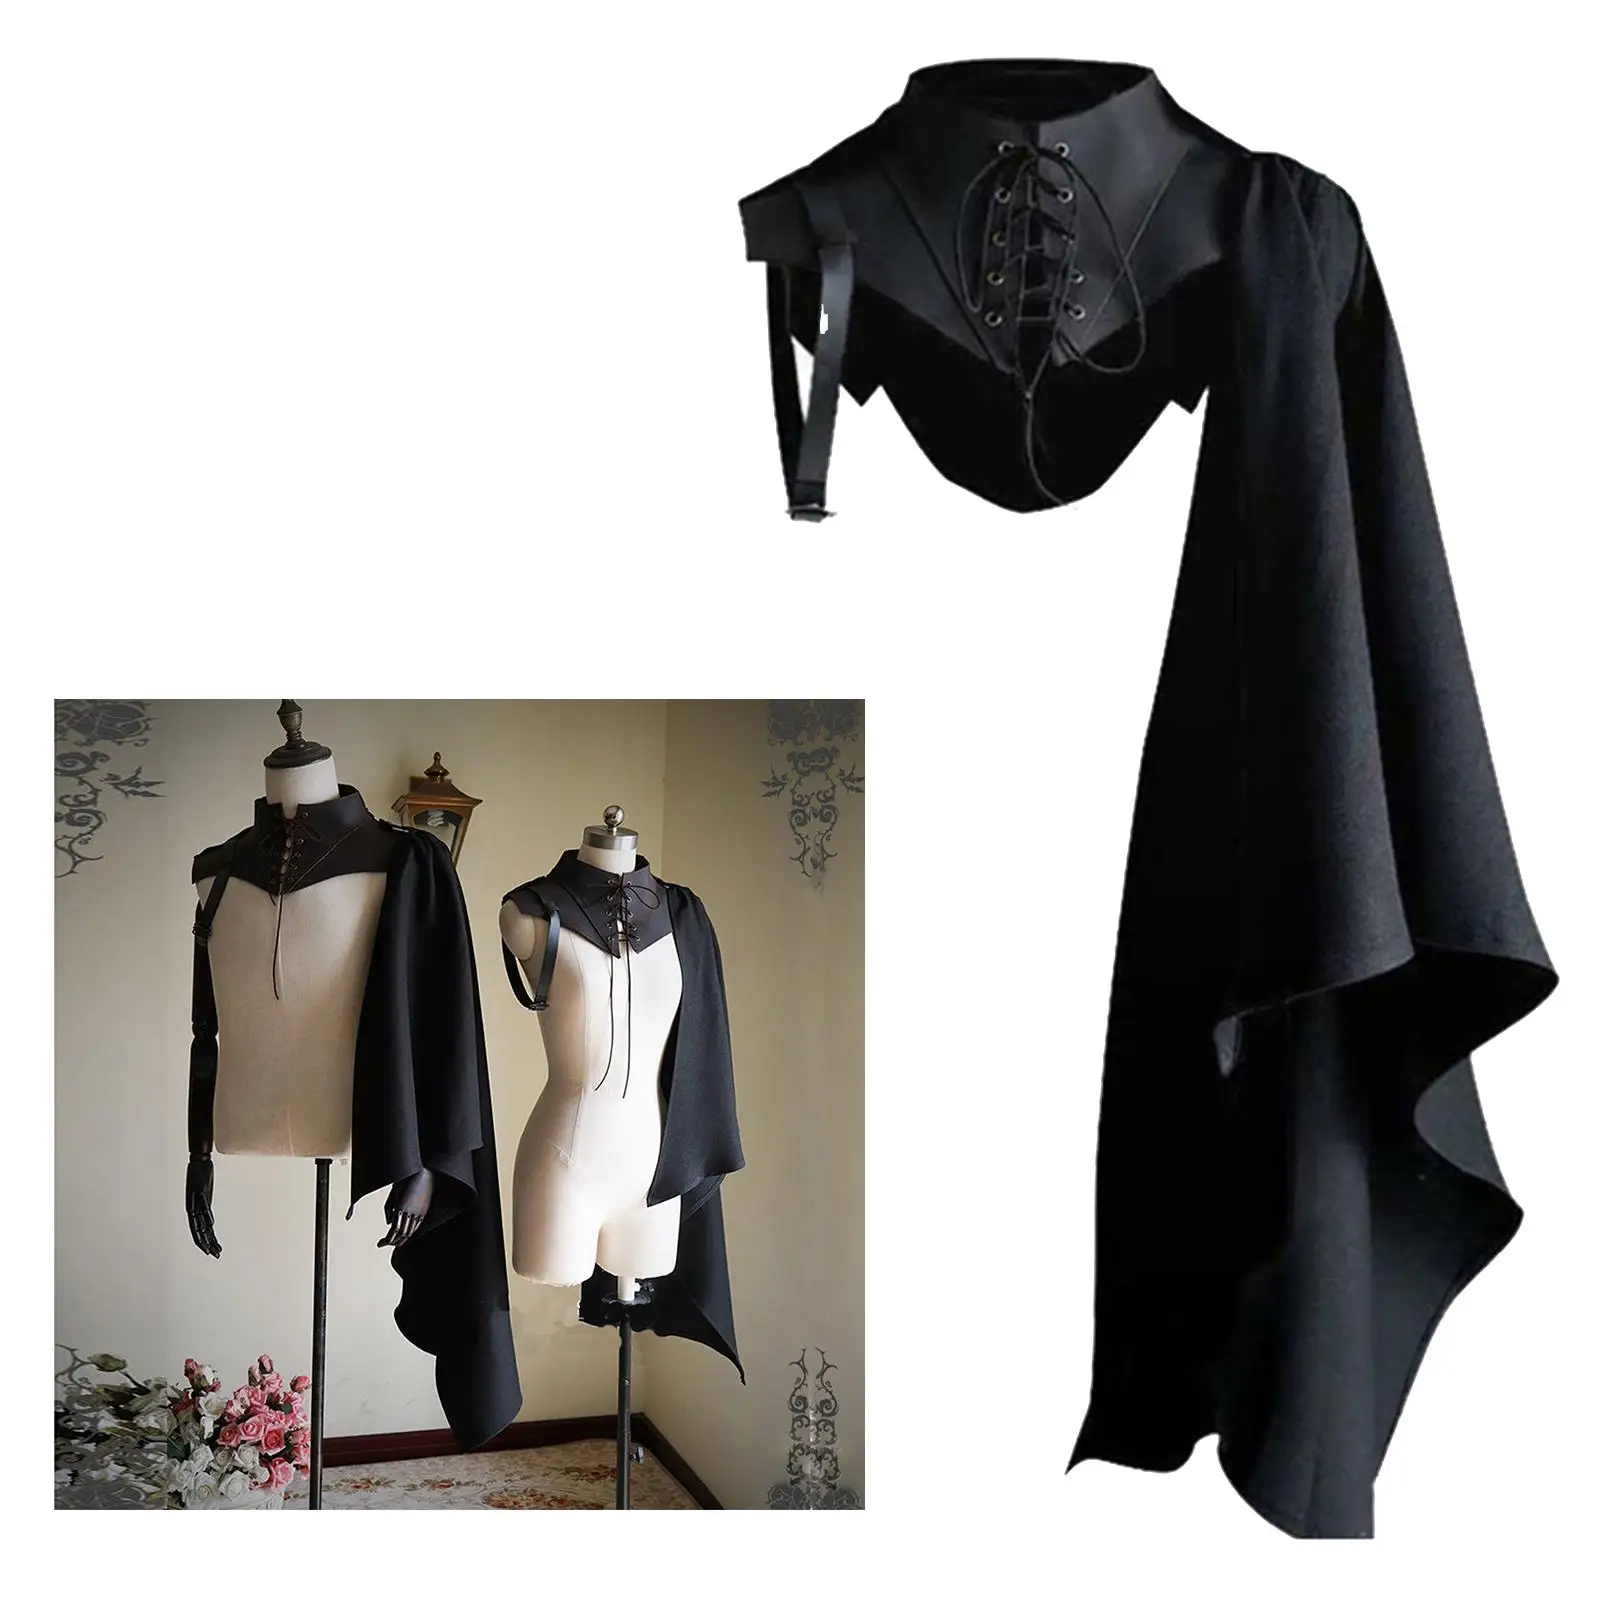 Women Men Accessories Uniform Elastic Neckline Cloak Gothic Clothing Costume Punk Medieval Armor Black Cloak for Party Halloween